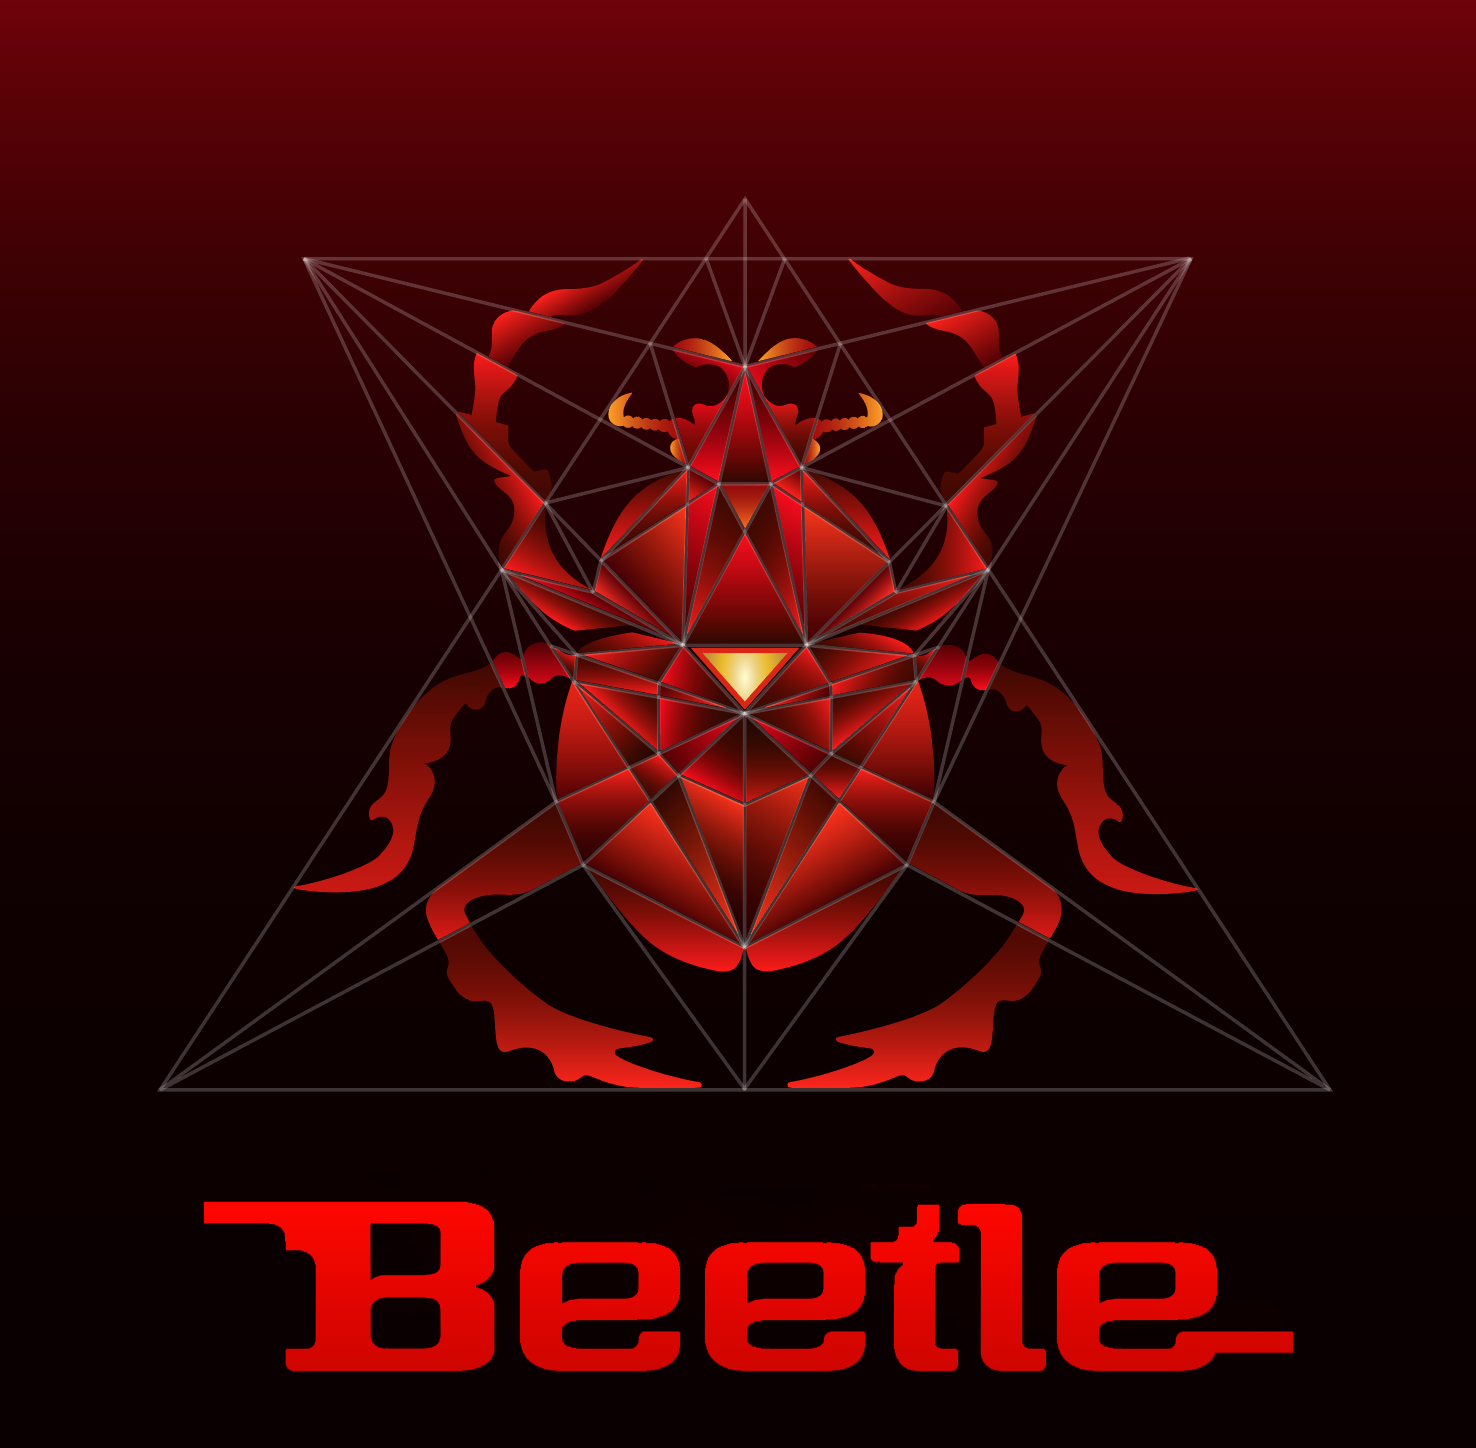 Beetle (Action Film)